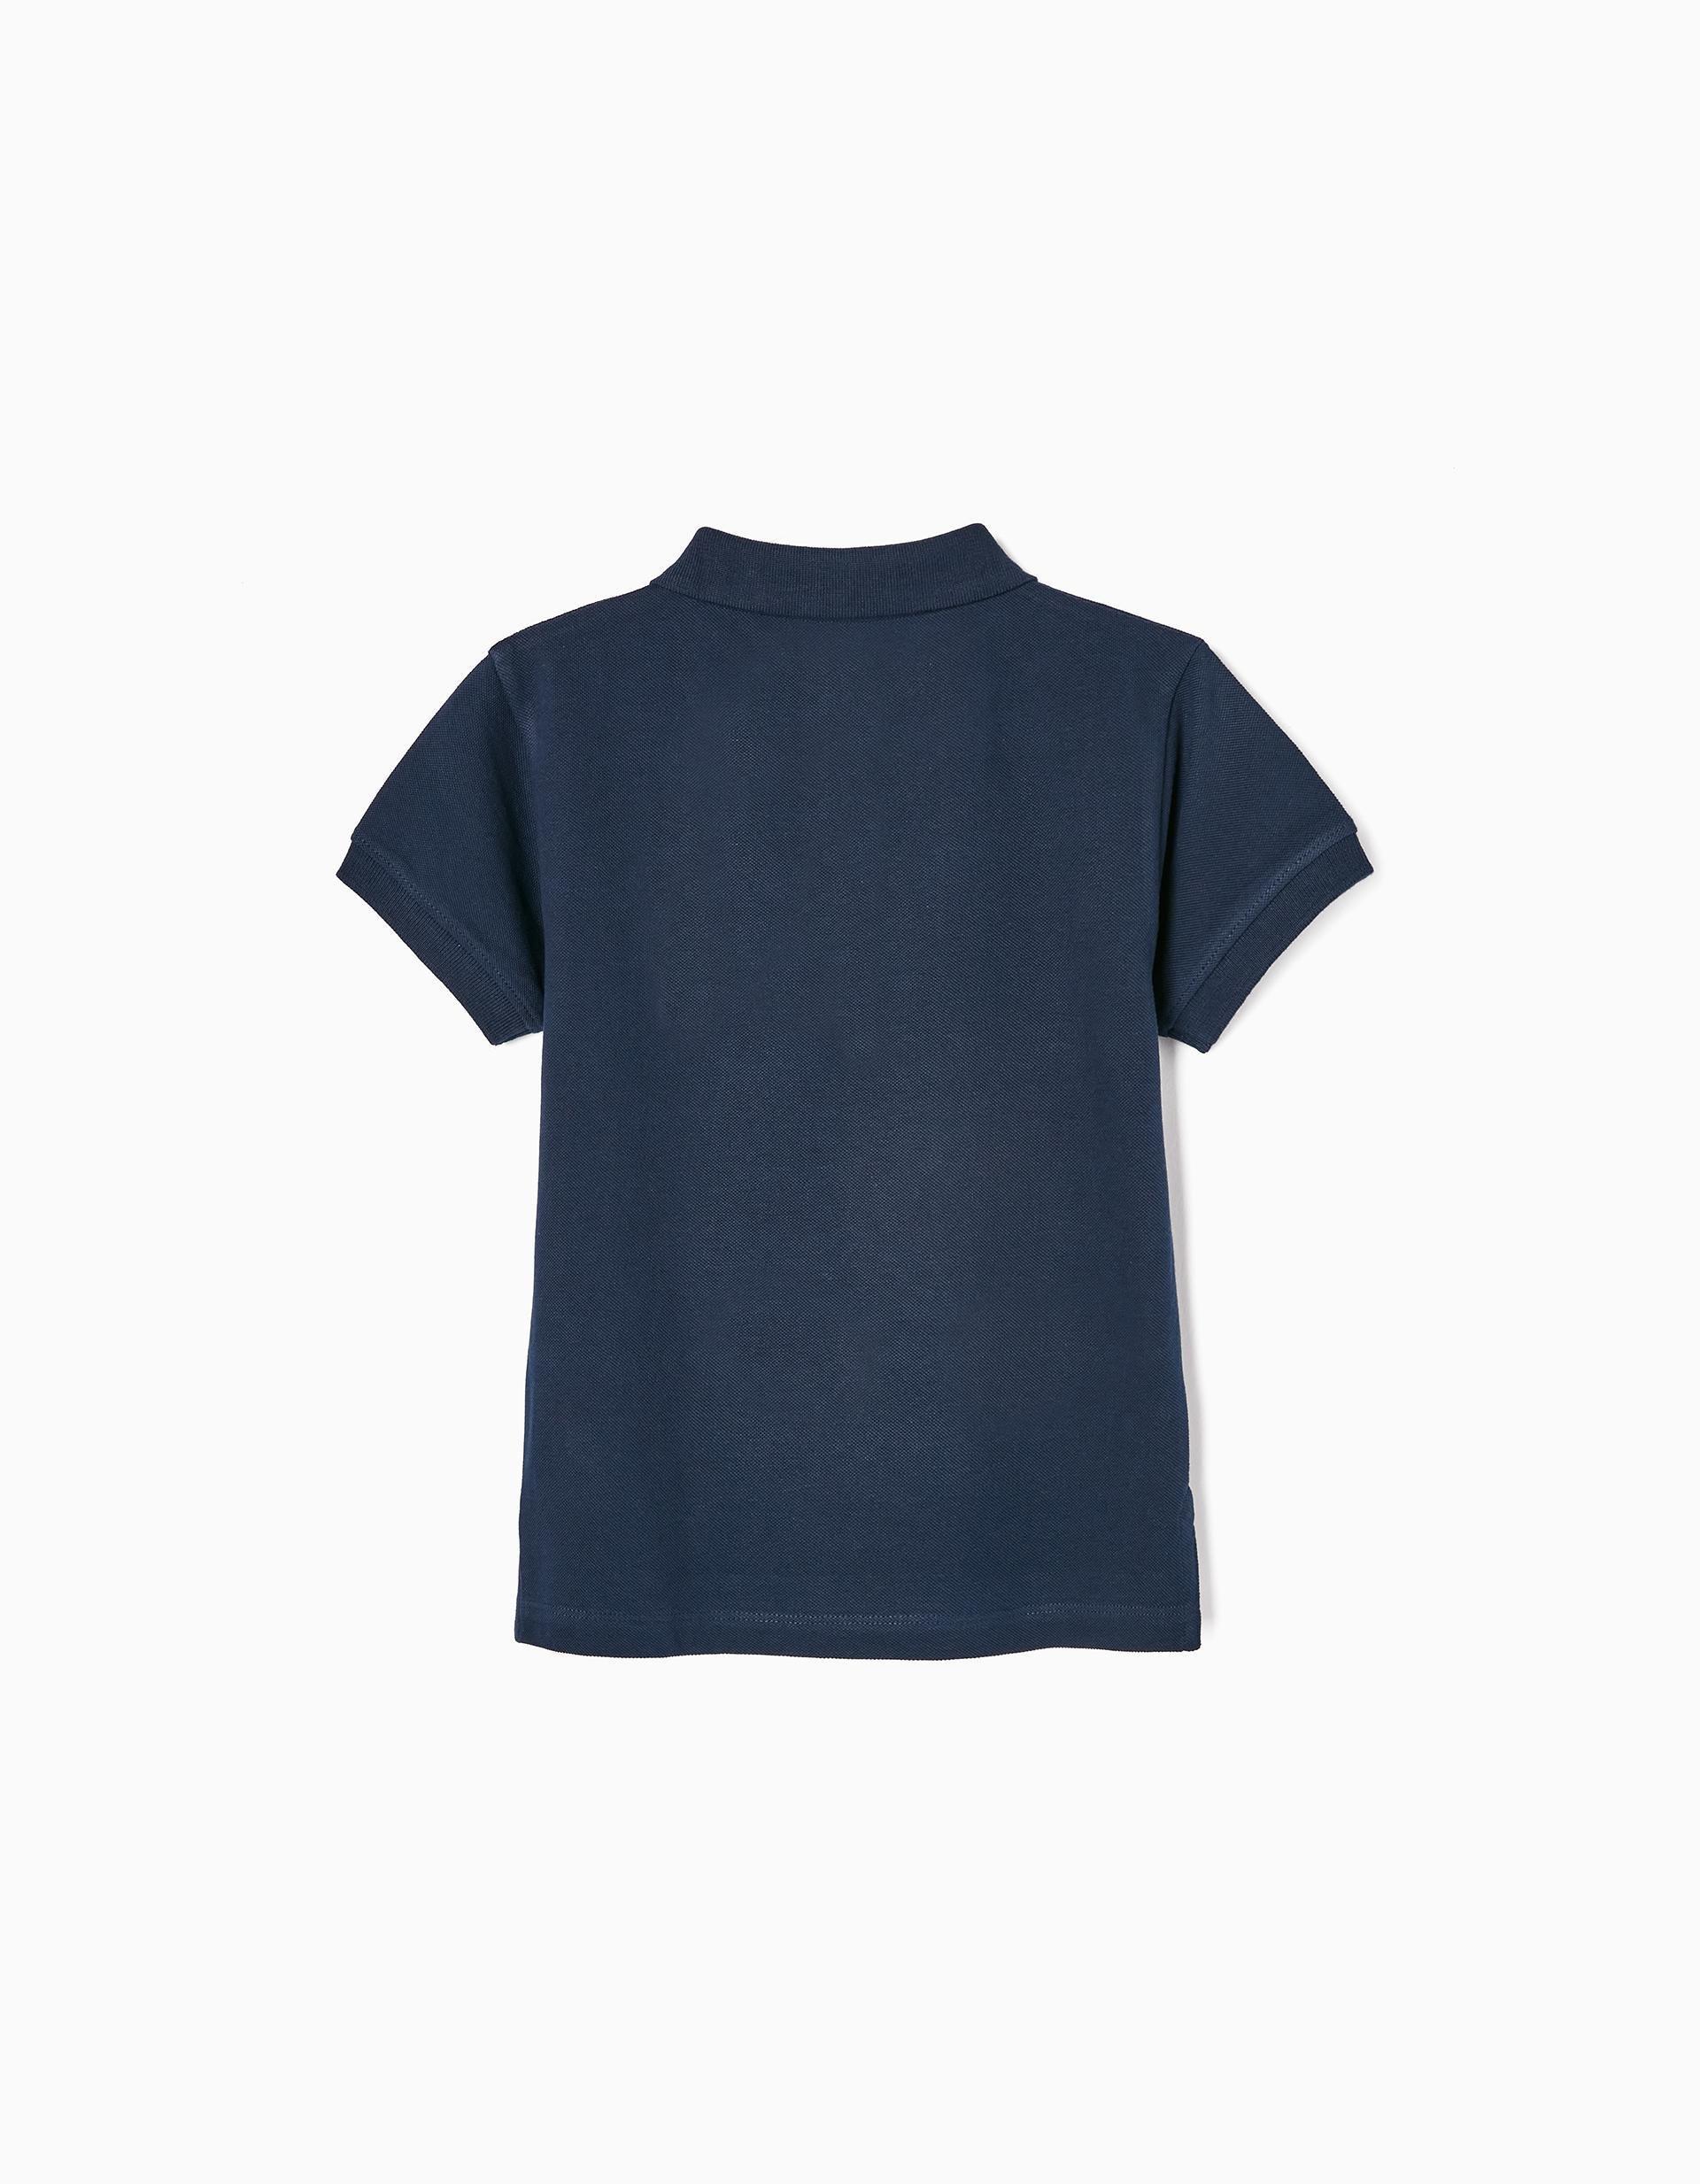 Zippy - Dark Polo Neck Plain T-Shirt, Kids Boys